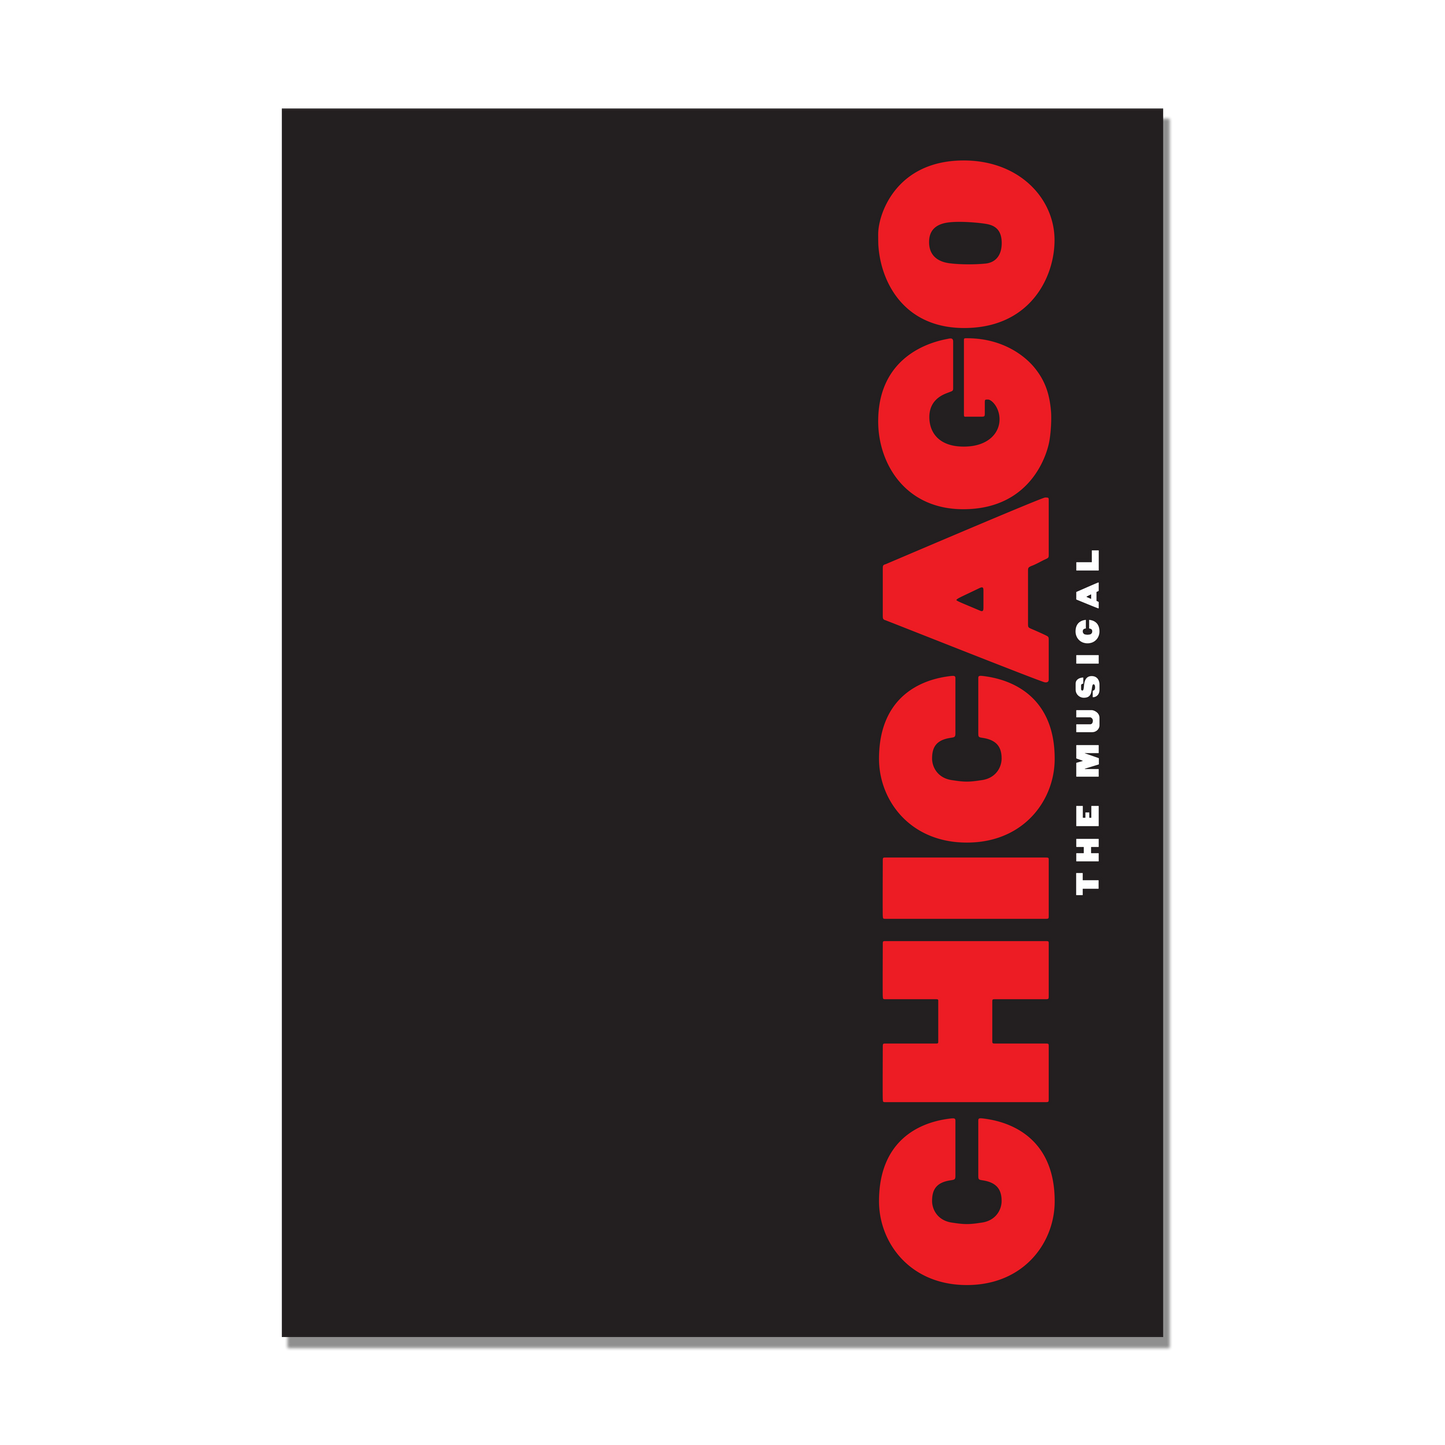 CHICAGO Souvenir Program Book